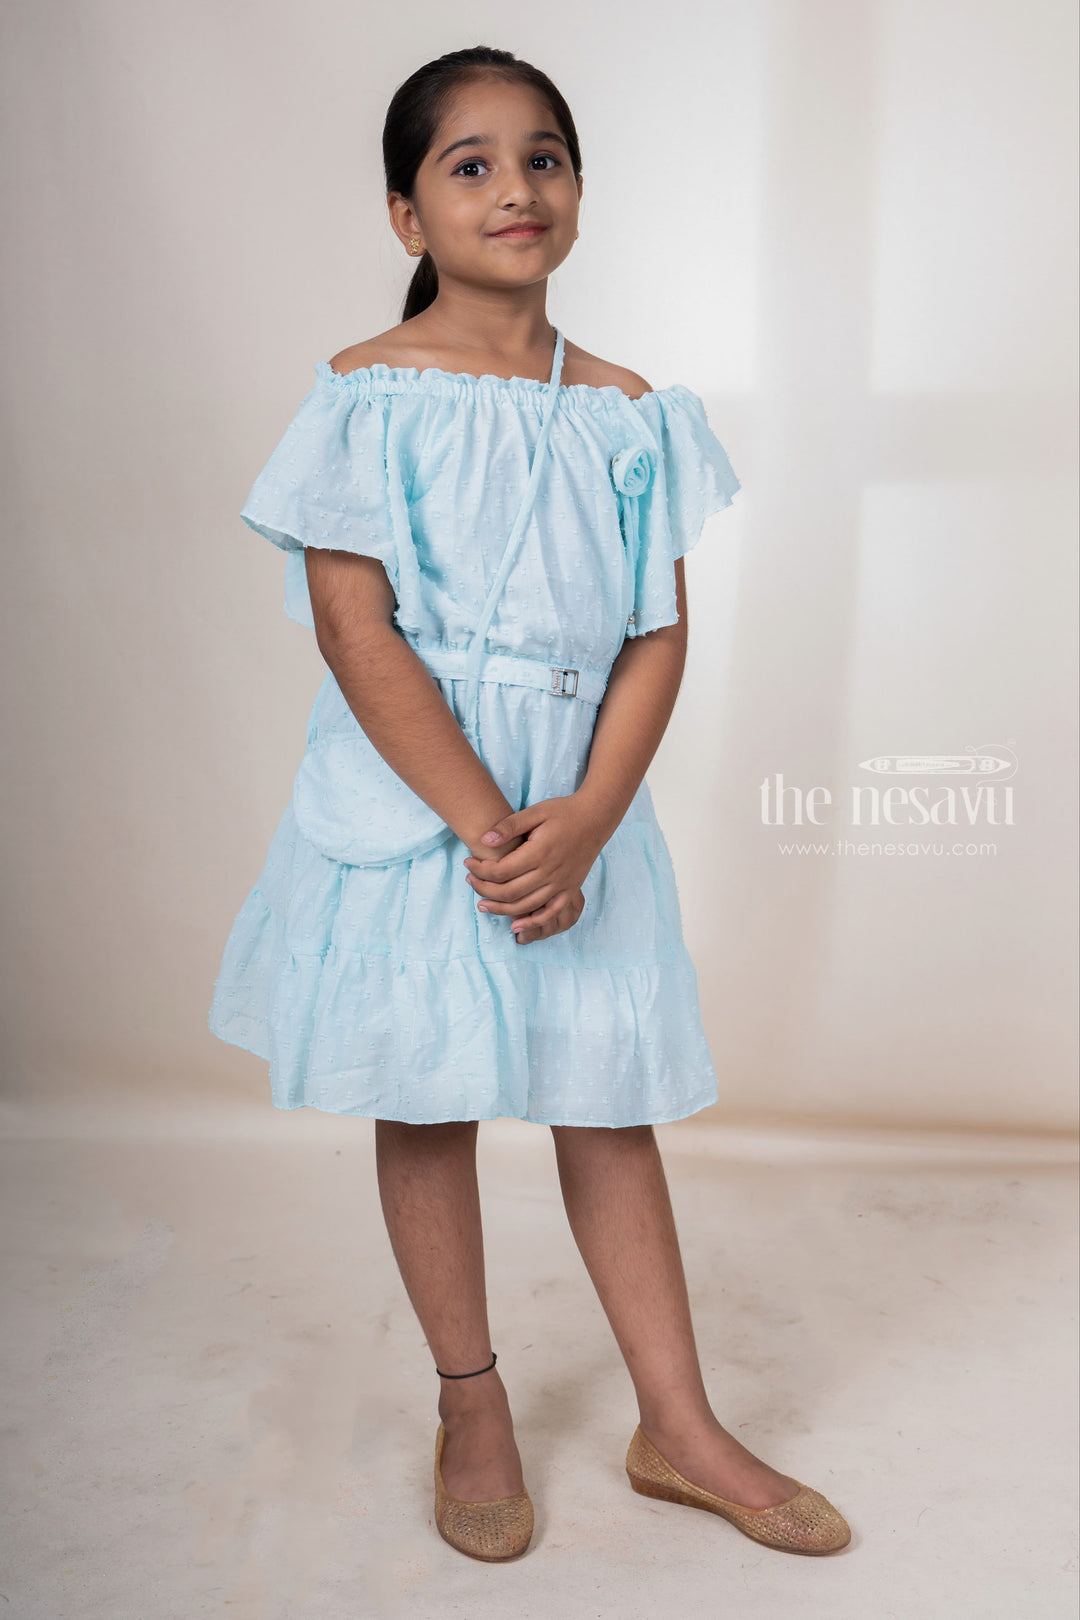 The Nesavu Frocks & Dresses Light Cyan Off-Shoulder Designed Soft Cotton Frock For Baby Girls With Matching Bag psr silks Nesavu 22 (4Y) / LightCyan GFC913C